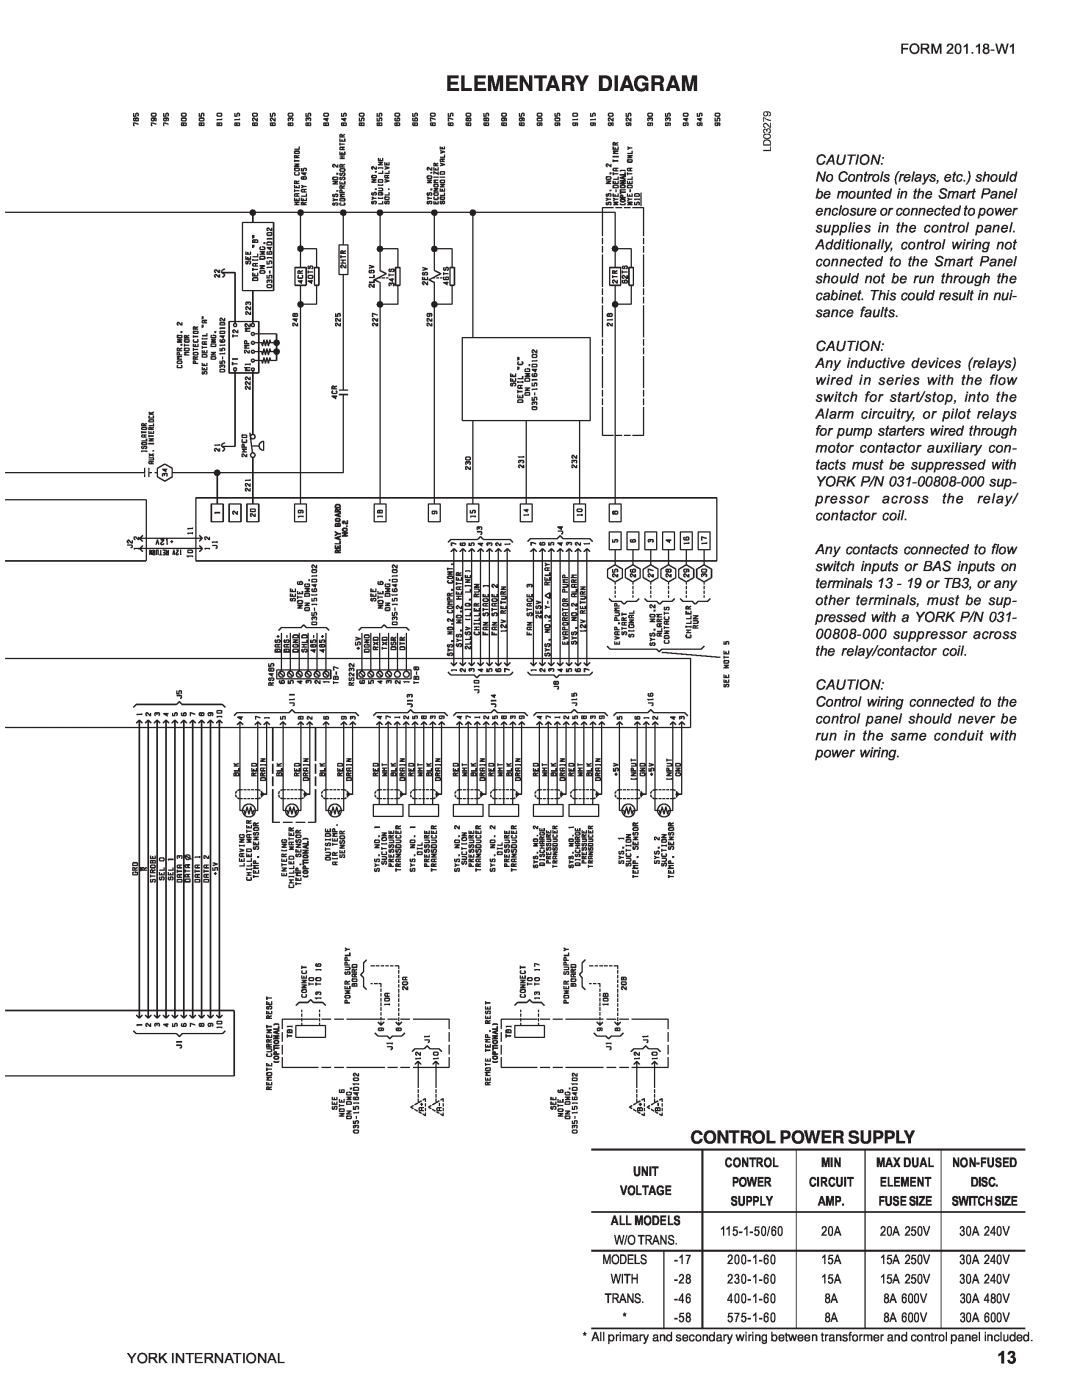 York YCAS0230 manual Control Power Supply, Elementary Diagram 